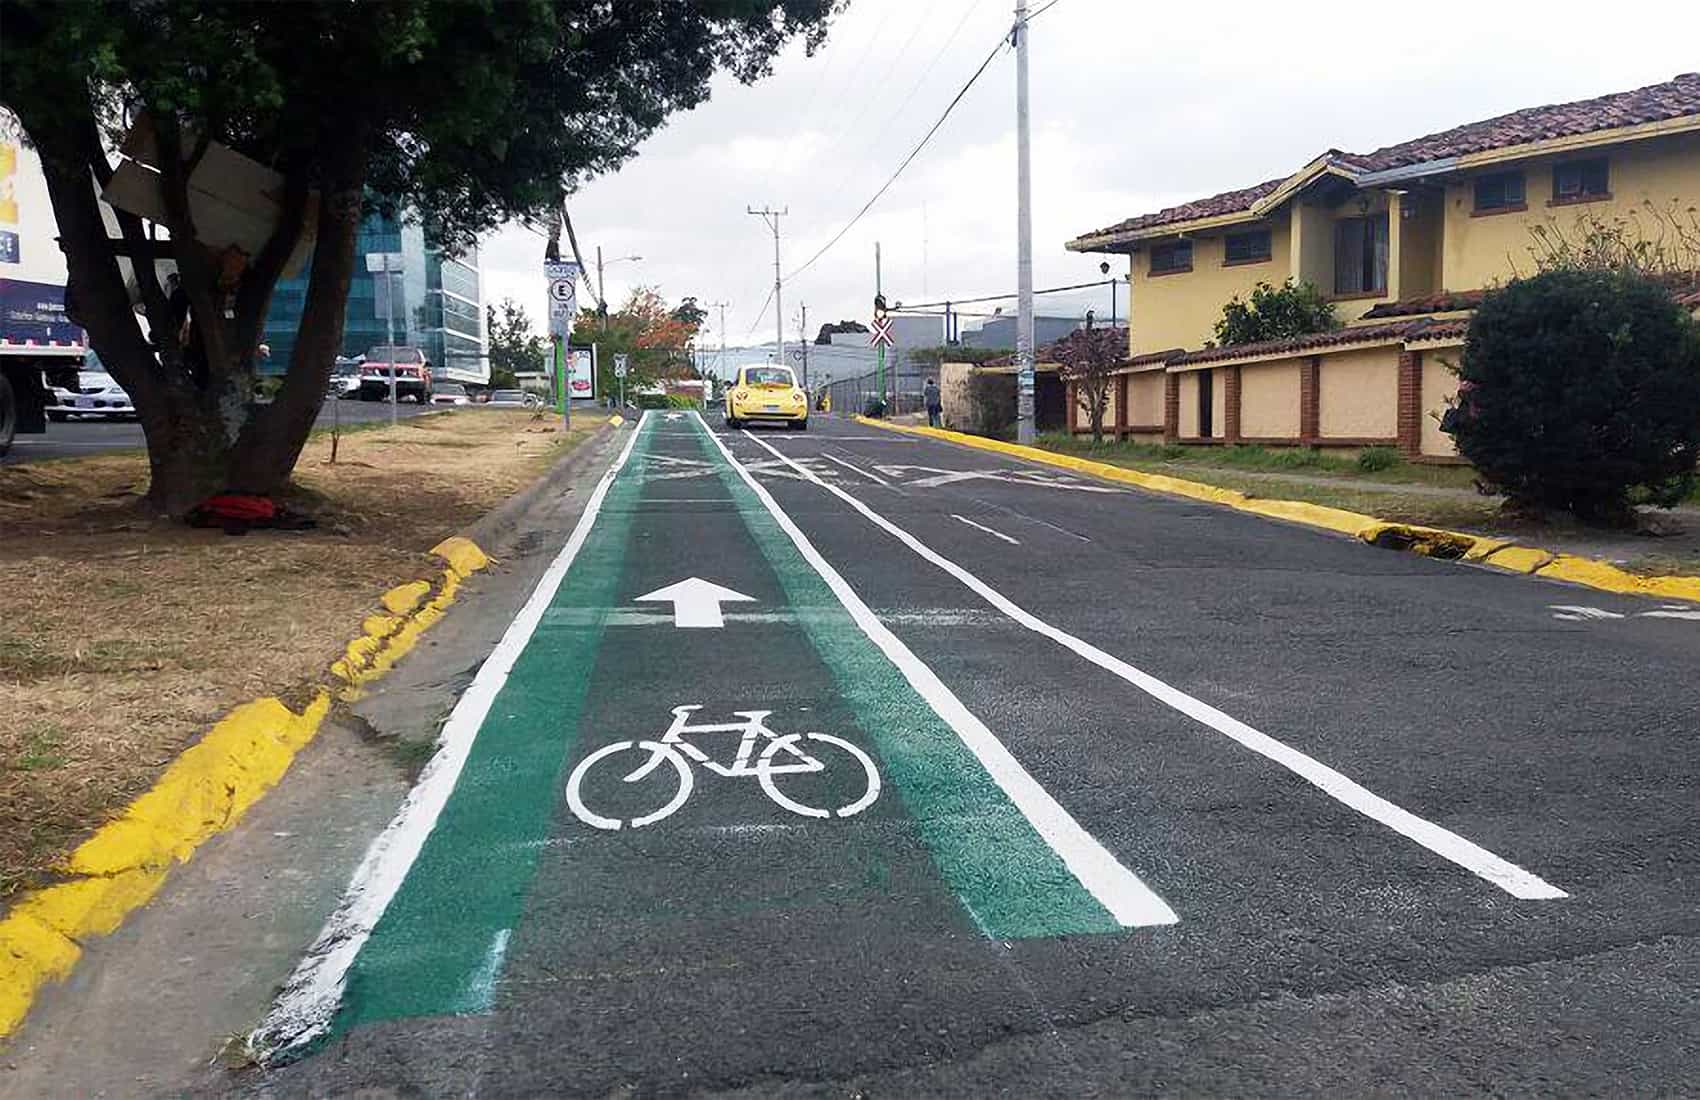 Carreras de bicicletas obligarán a cerrar carreteras costarricenses: